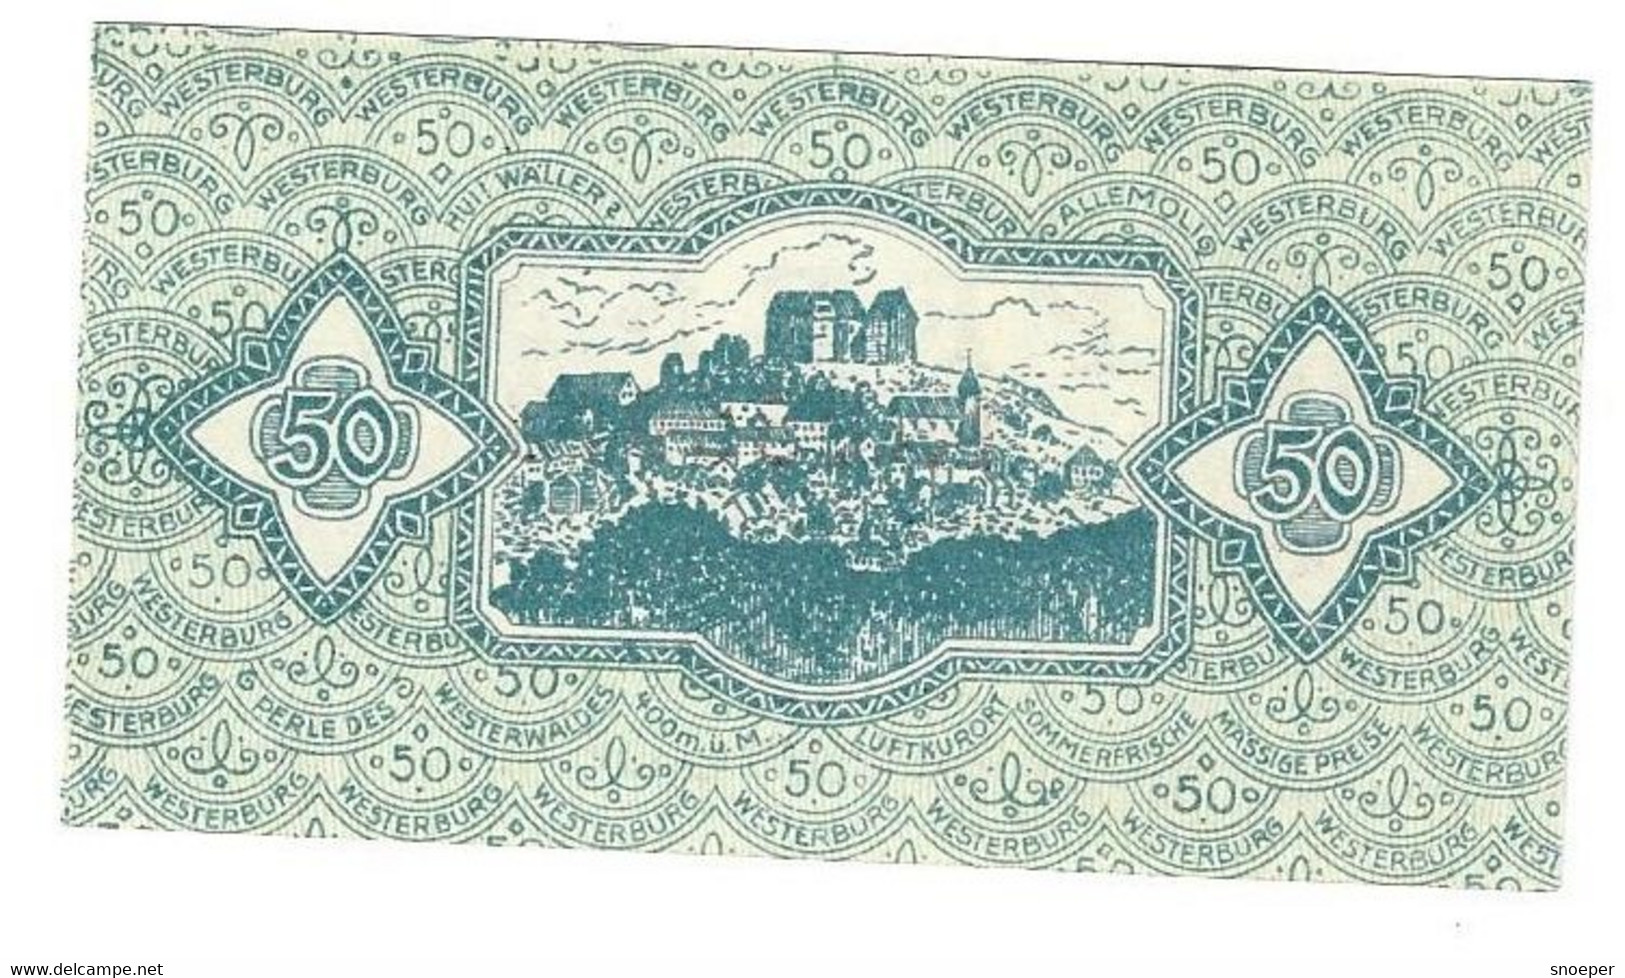 **notgeld  Westerburg 50 Pfennig W33.5 - [11] Local Banknote Issues